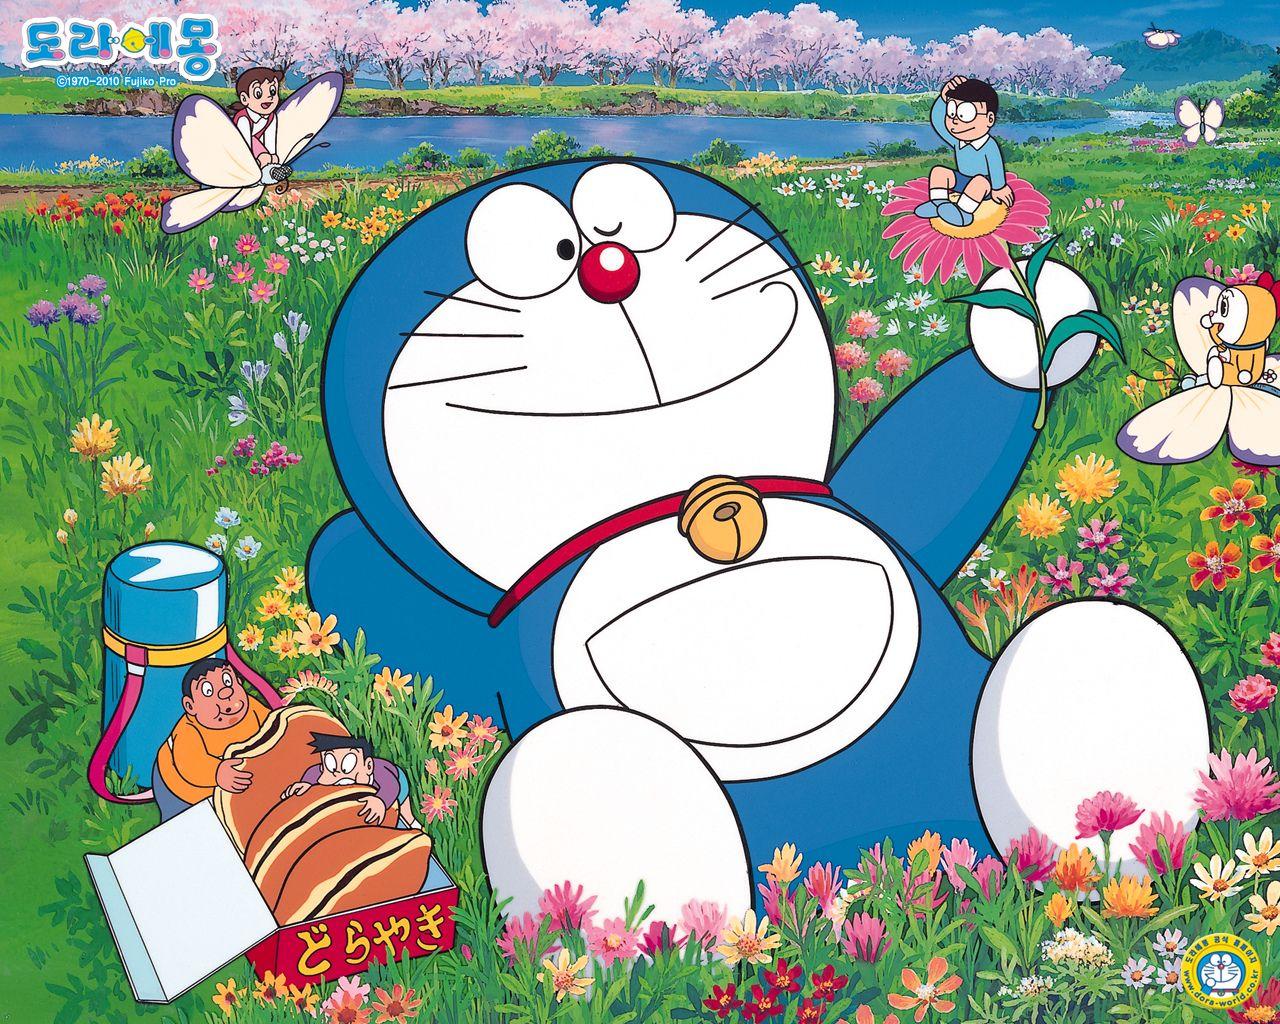 BM:955 Wallpaper, Doraemon HD Pics Free Large Image